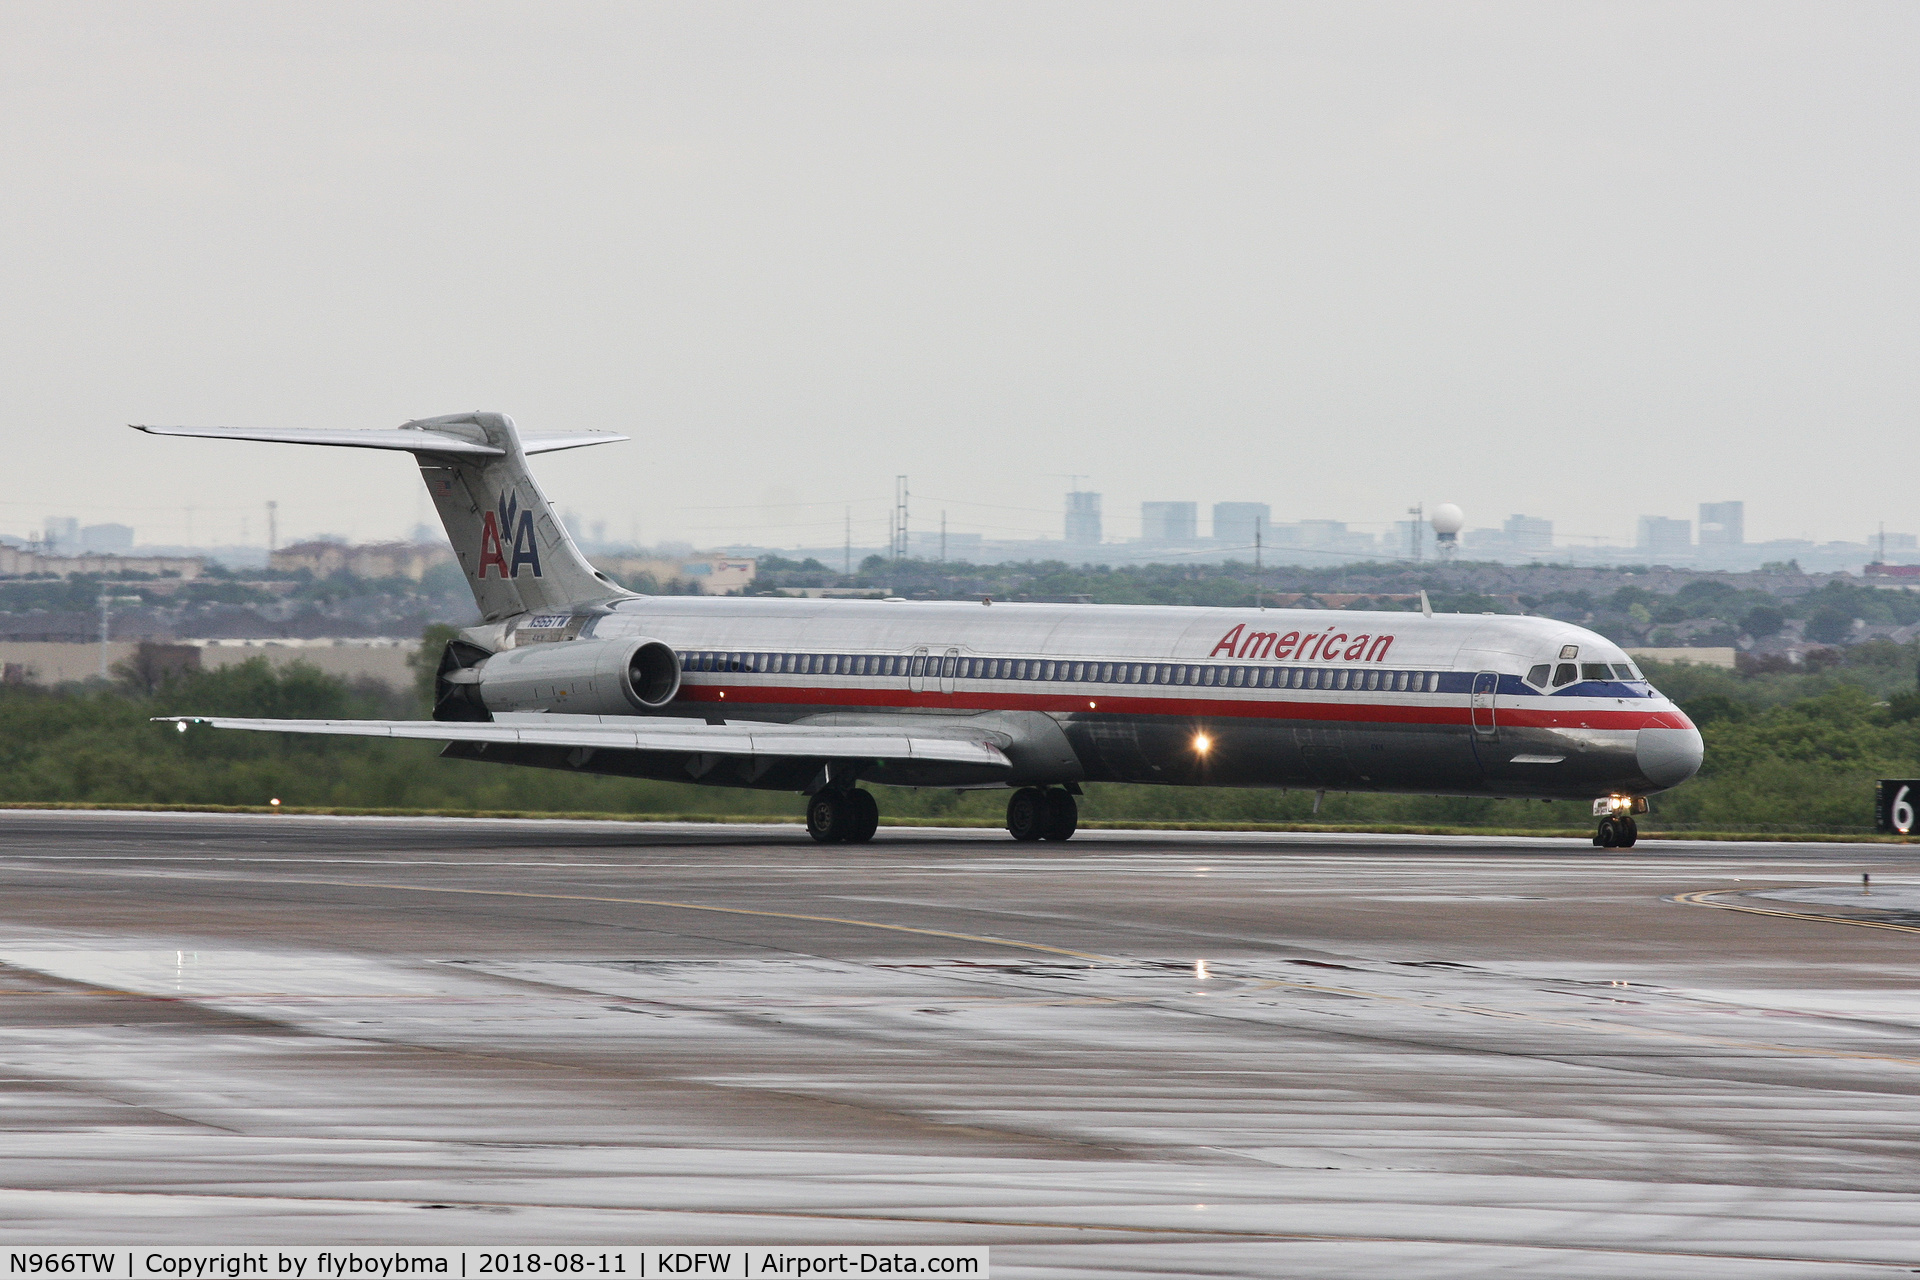 N966TW, 1999 McDonnell Douglas MD-83 (DC-9-83) C/N 53616, N966TW lands on runway 17L at DFW International Airport.